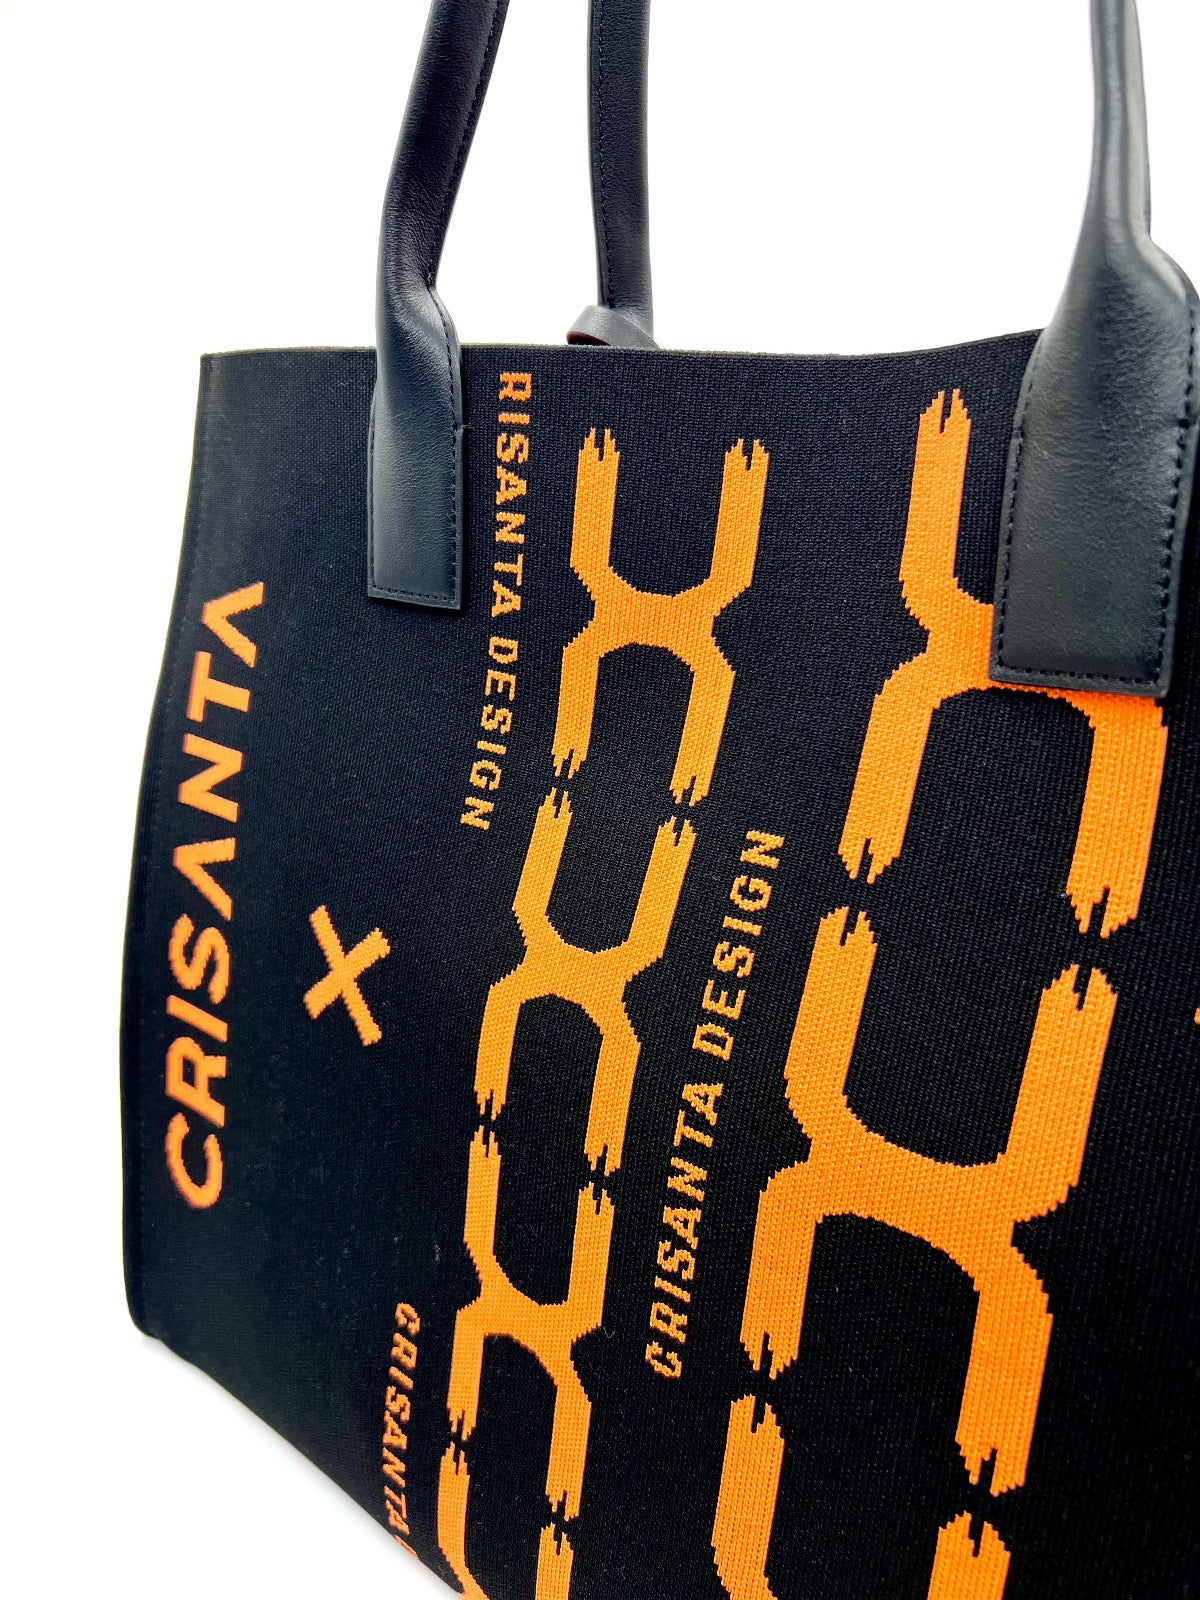 Shopping Bag, your stylish shopping companion